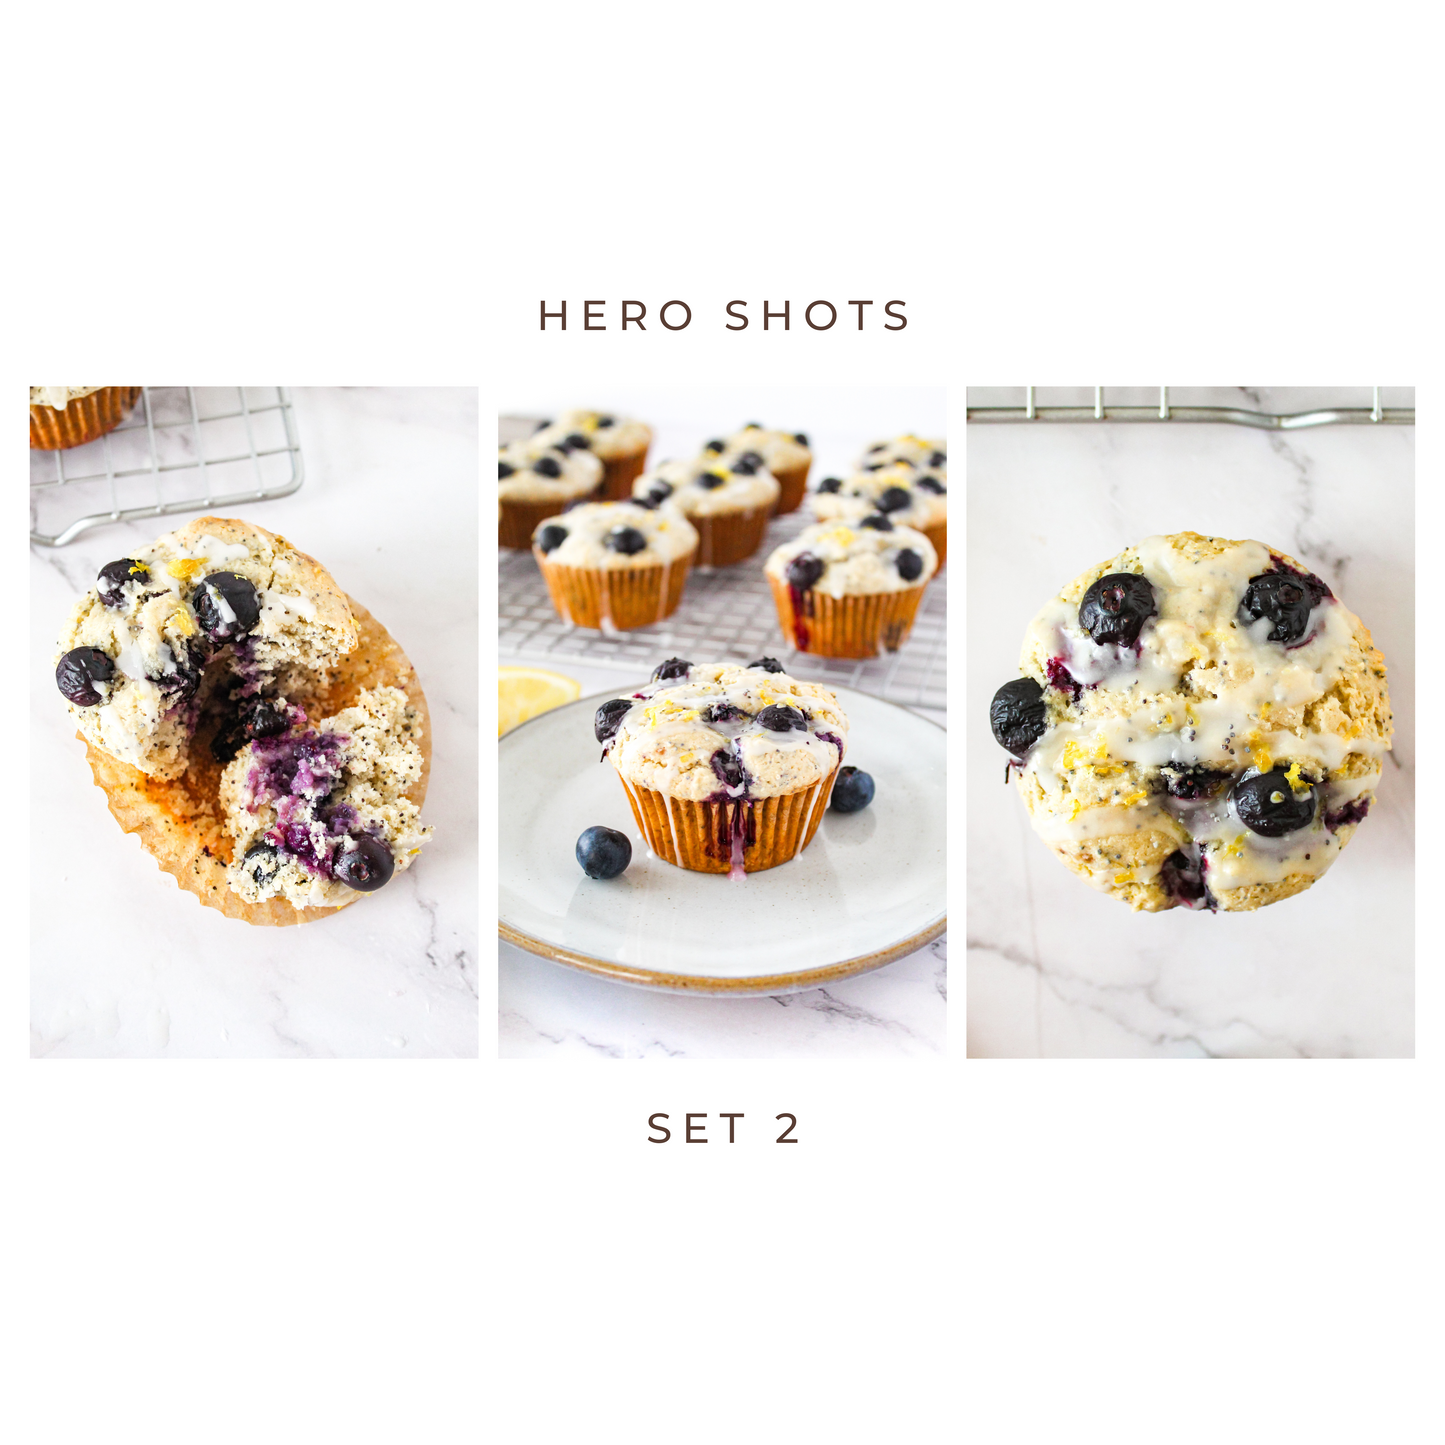 Blueberry Lemon Poppy Seed Muffins (GF) (set 2)